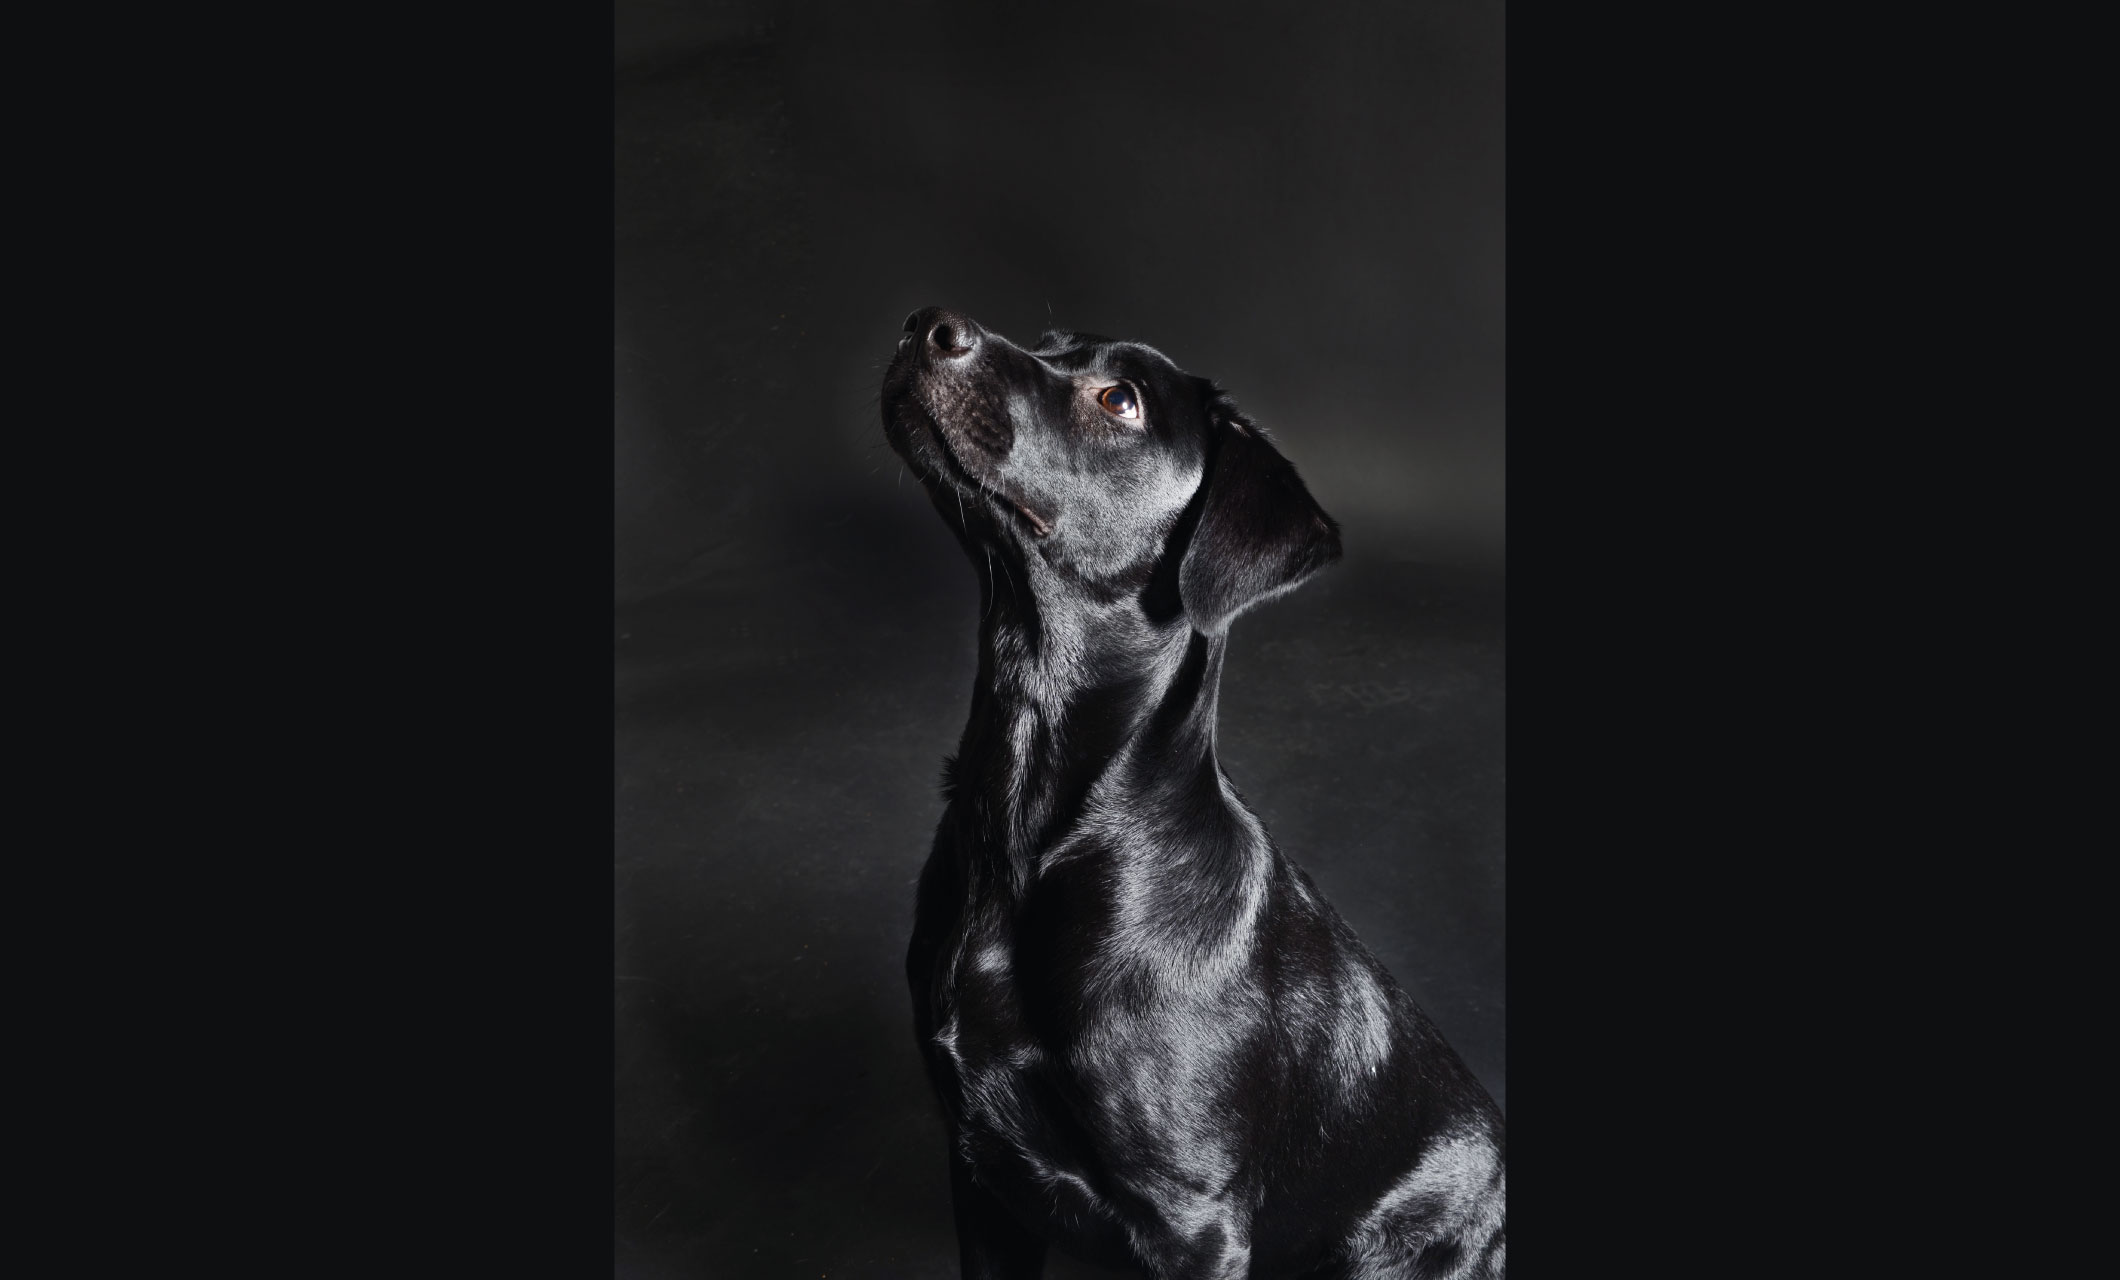 a black dog looks up